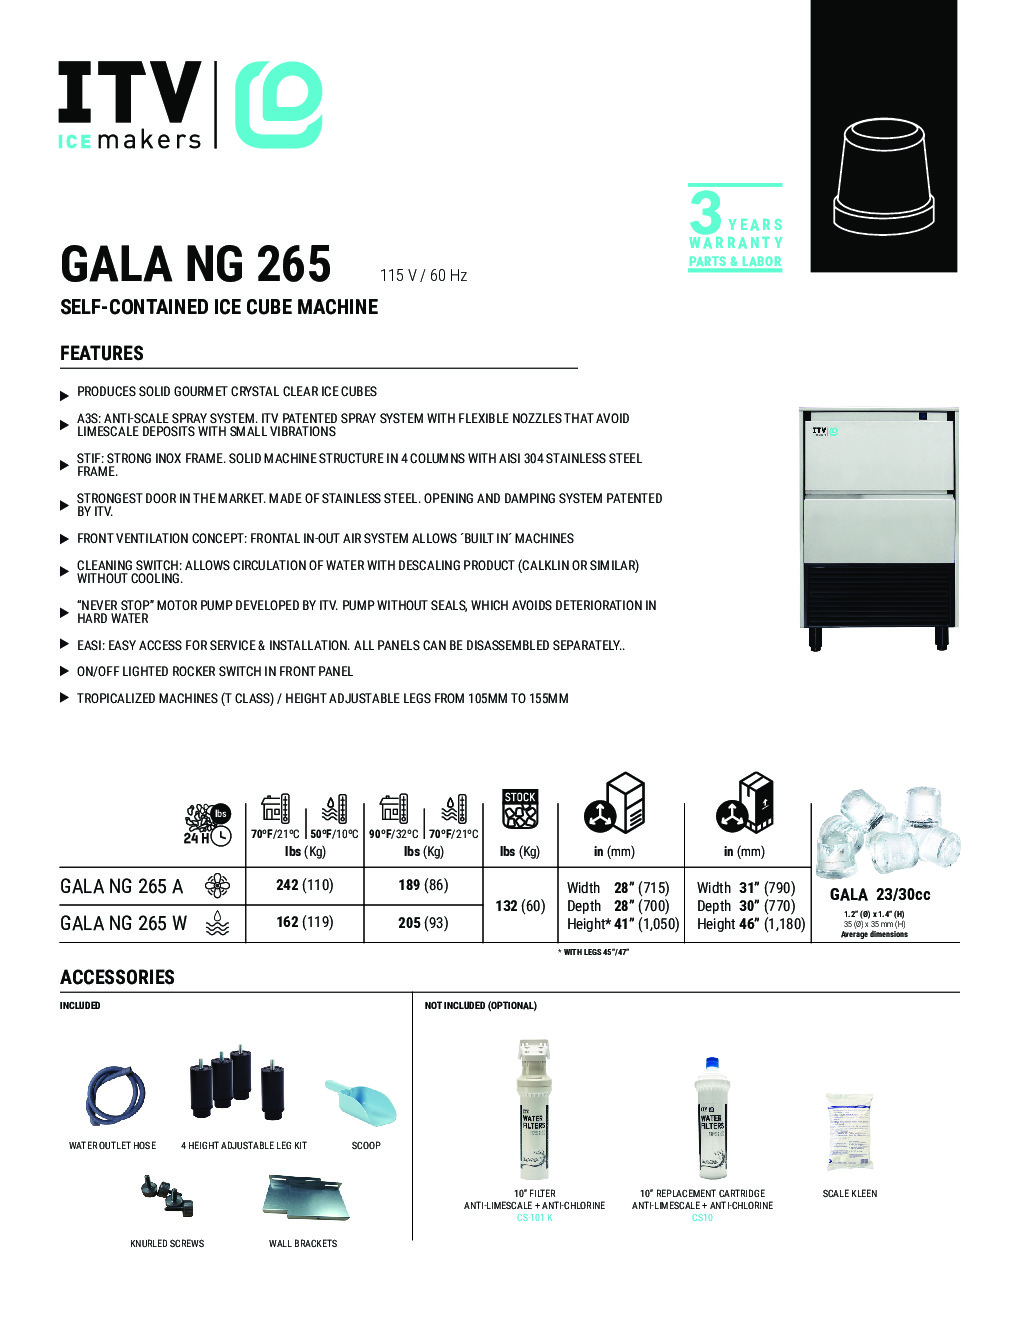 ITV GALA NG 265 Ice Maker with Bin, 123 lbs, Thimble Cubes, 242 lbs/Day